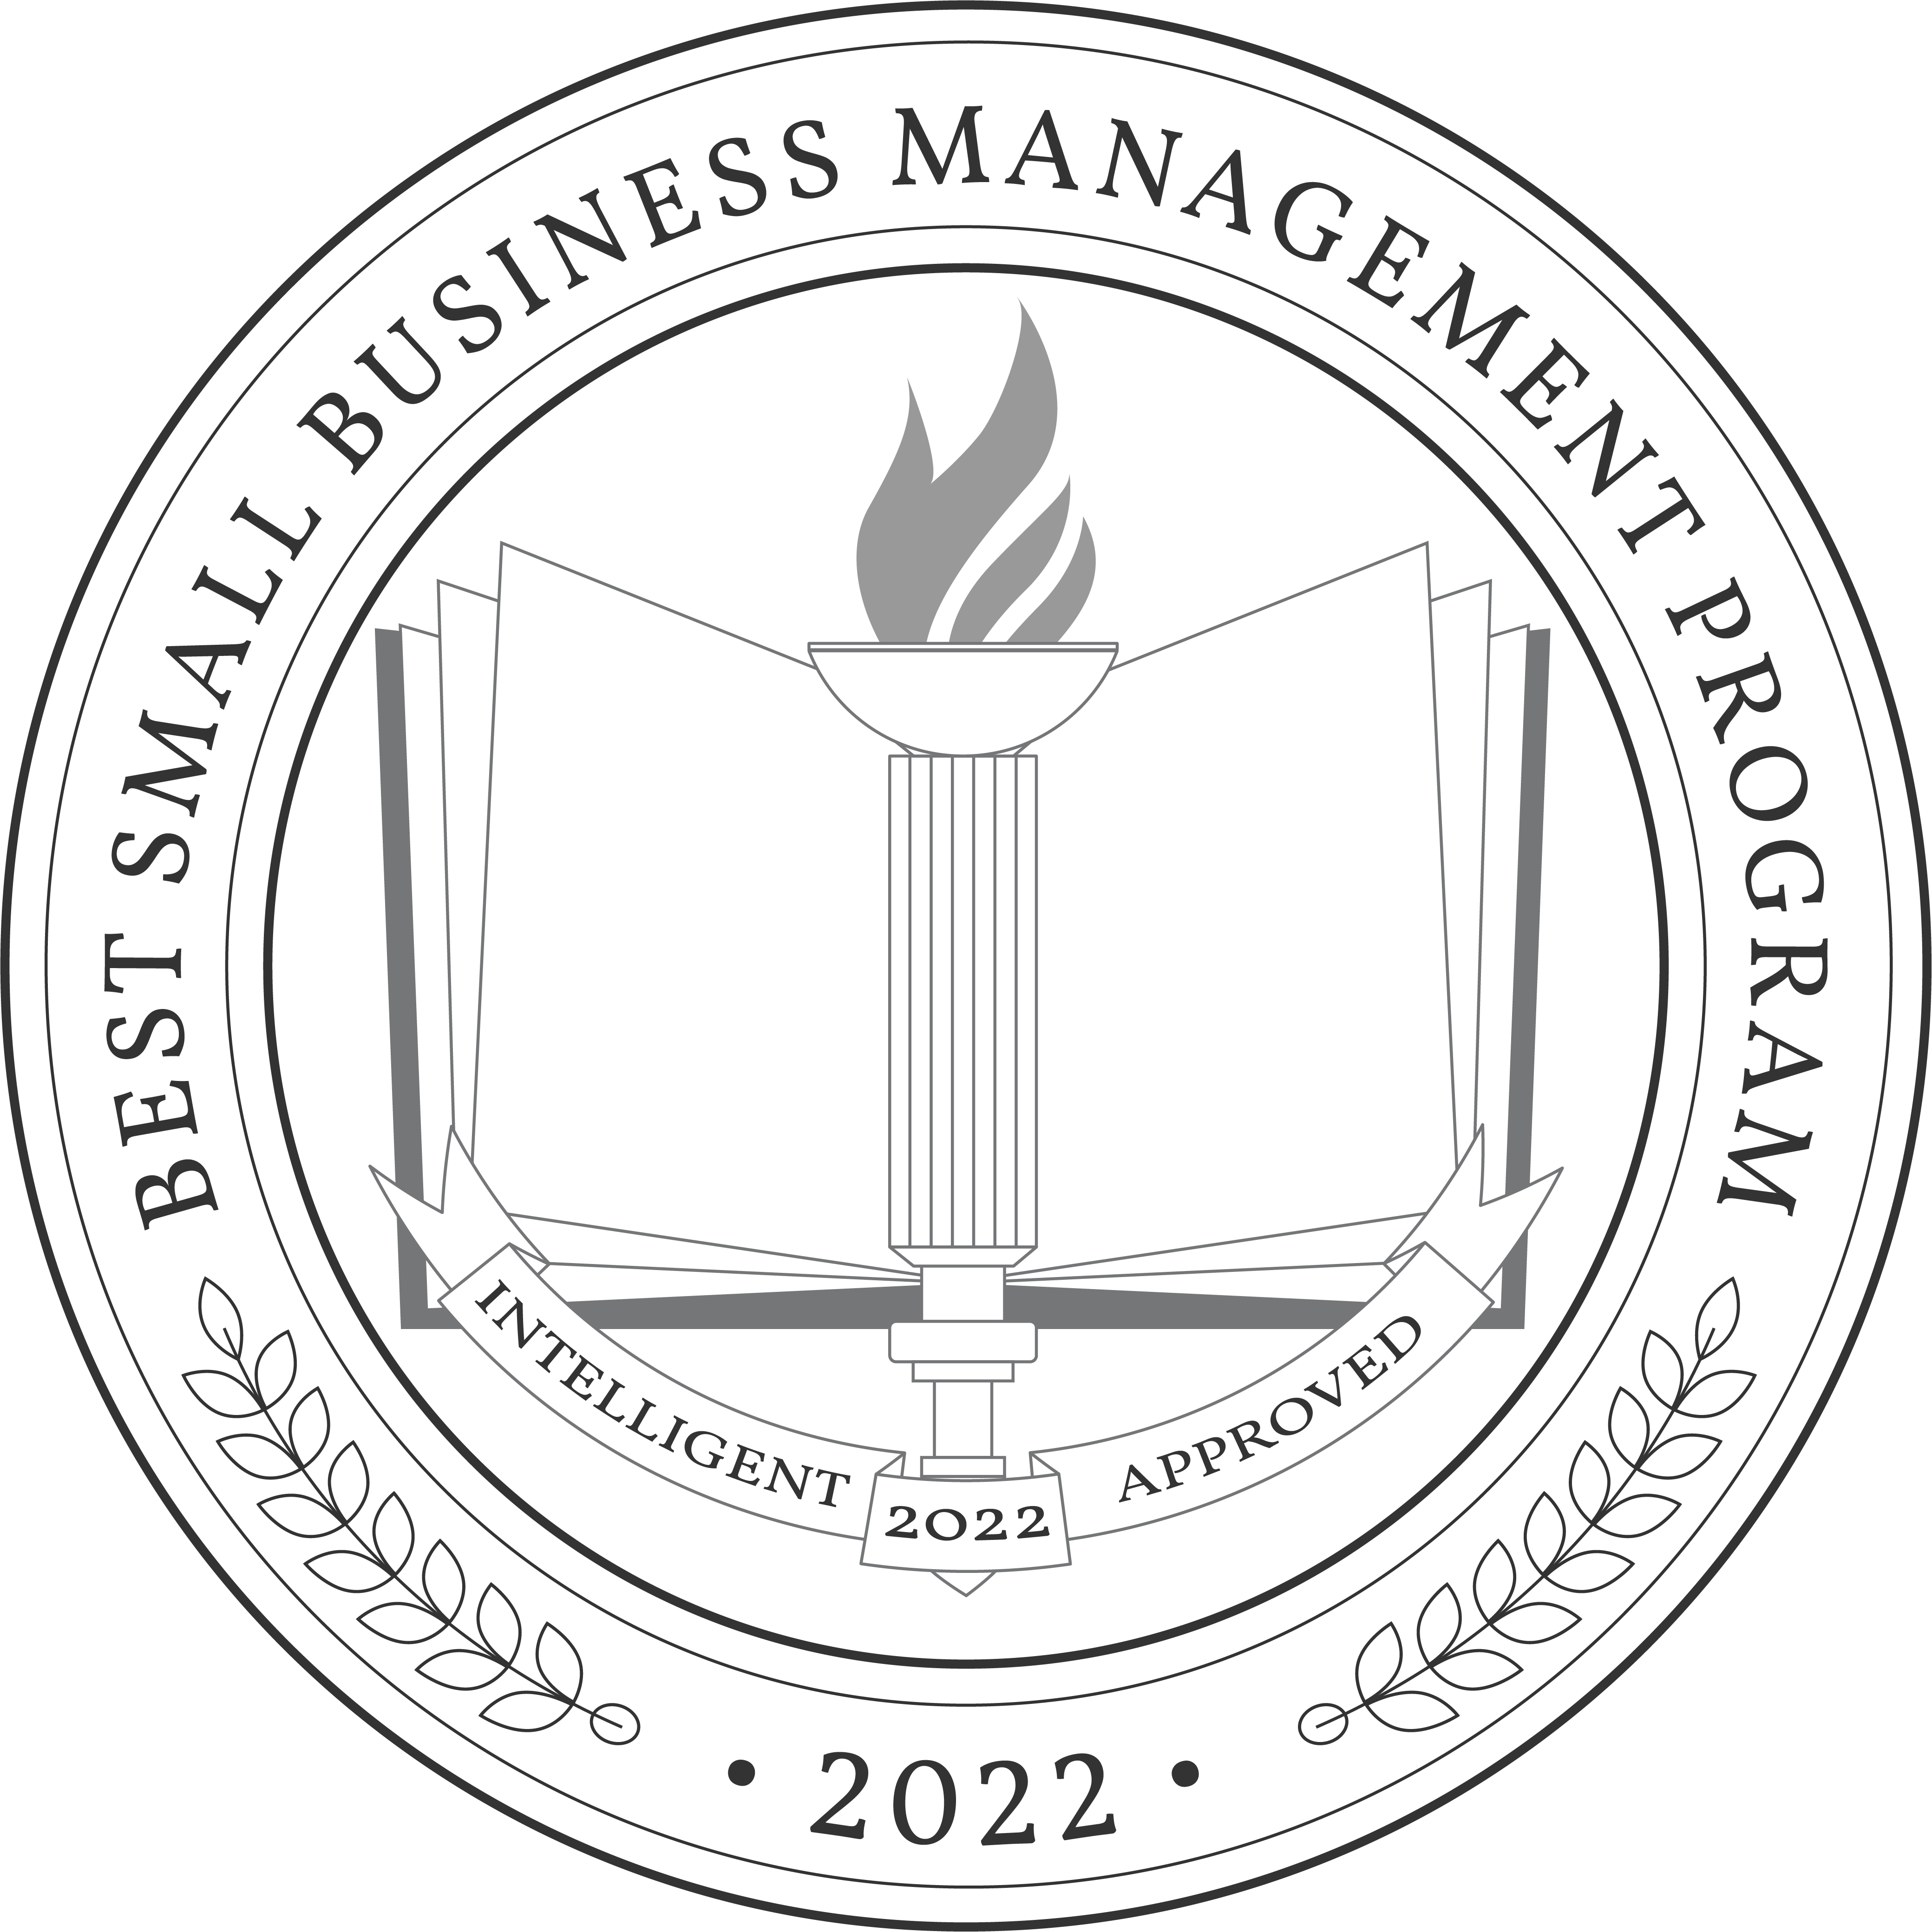 Best-Small-Business-Management-Program-Badge.png